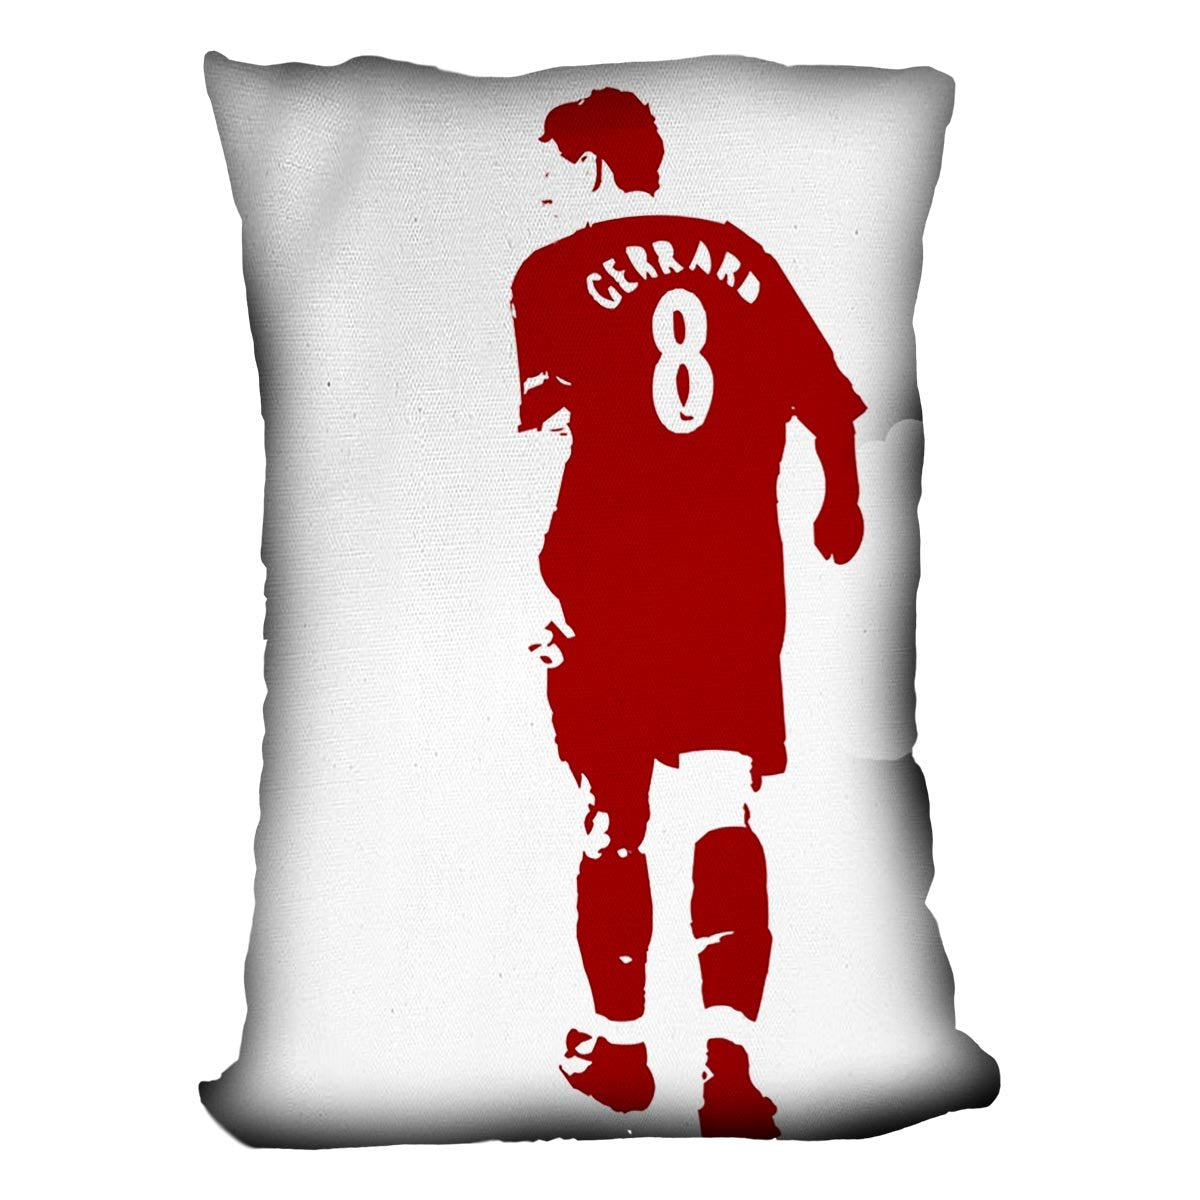 Gerrard Pop Art Cushion